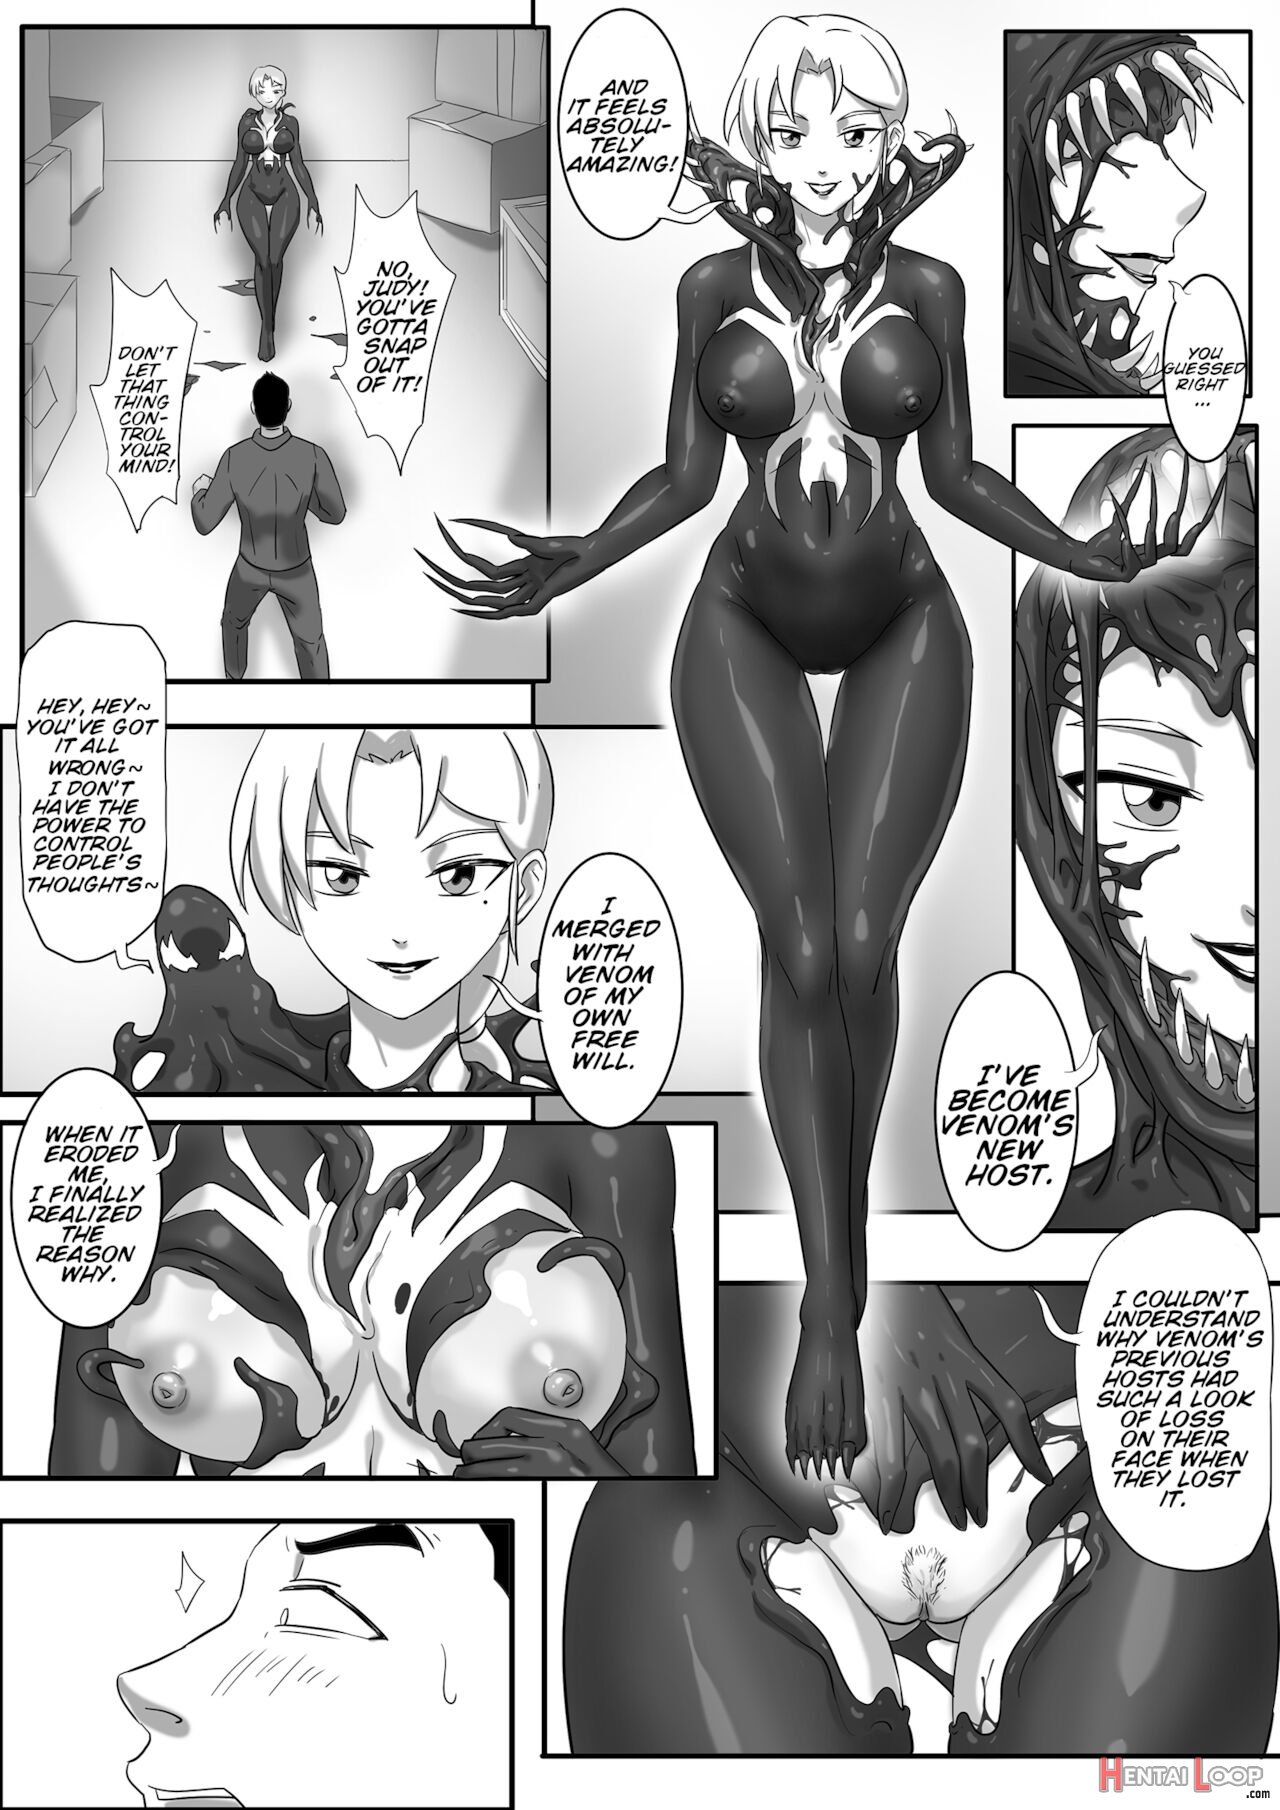 Venom---fusion Symbiosis 02 page 4